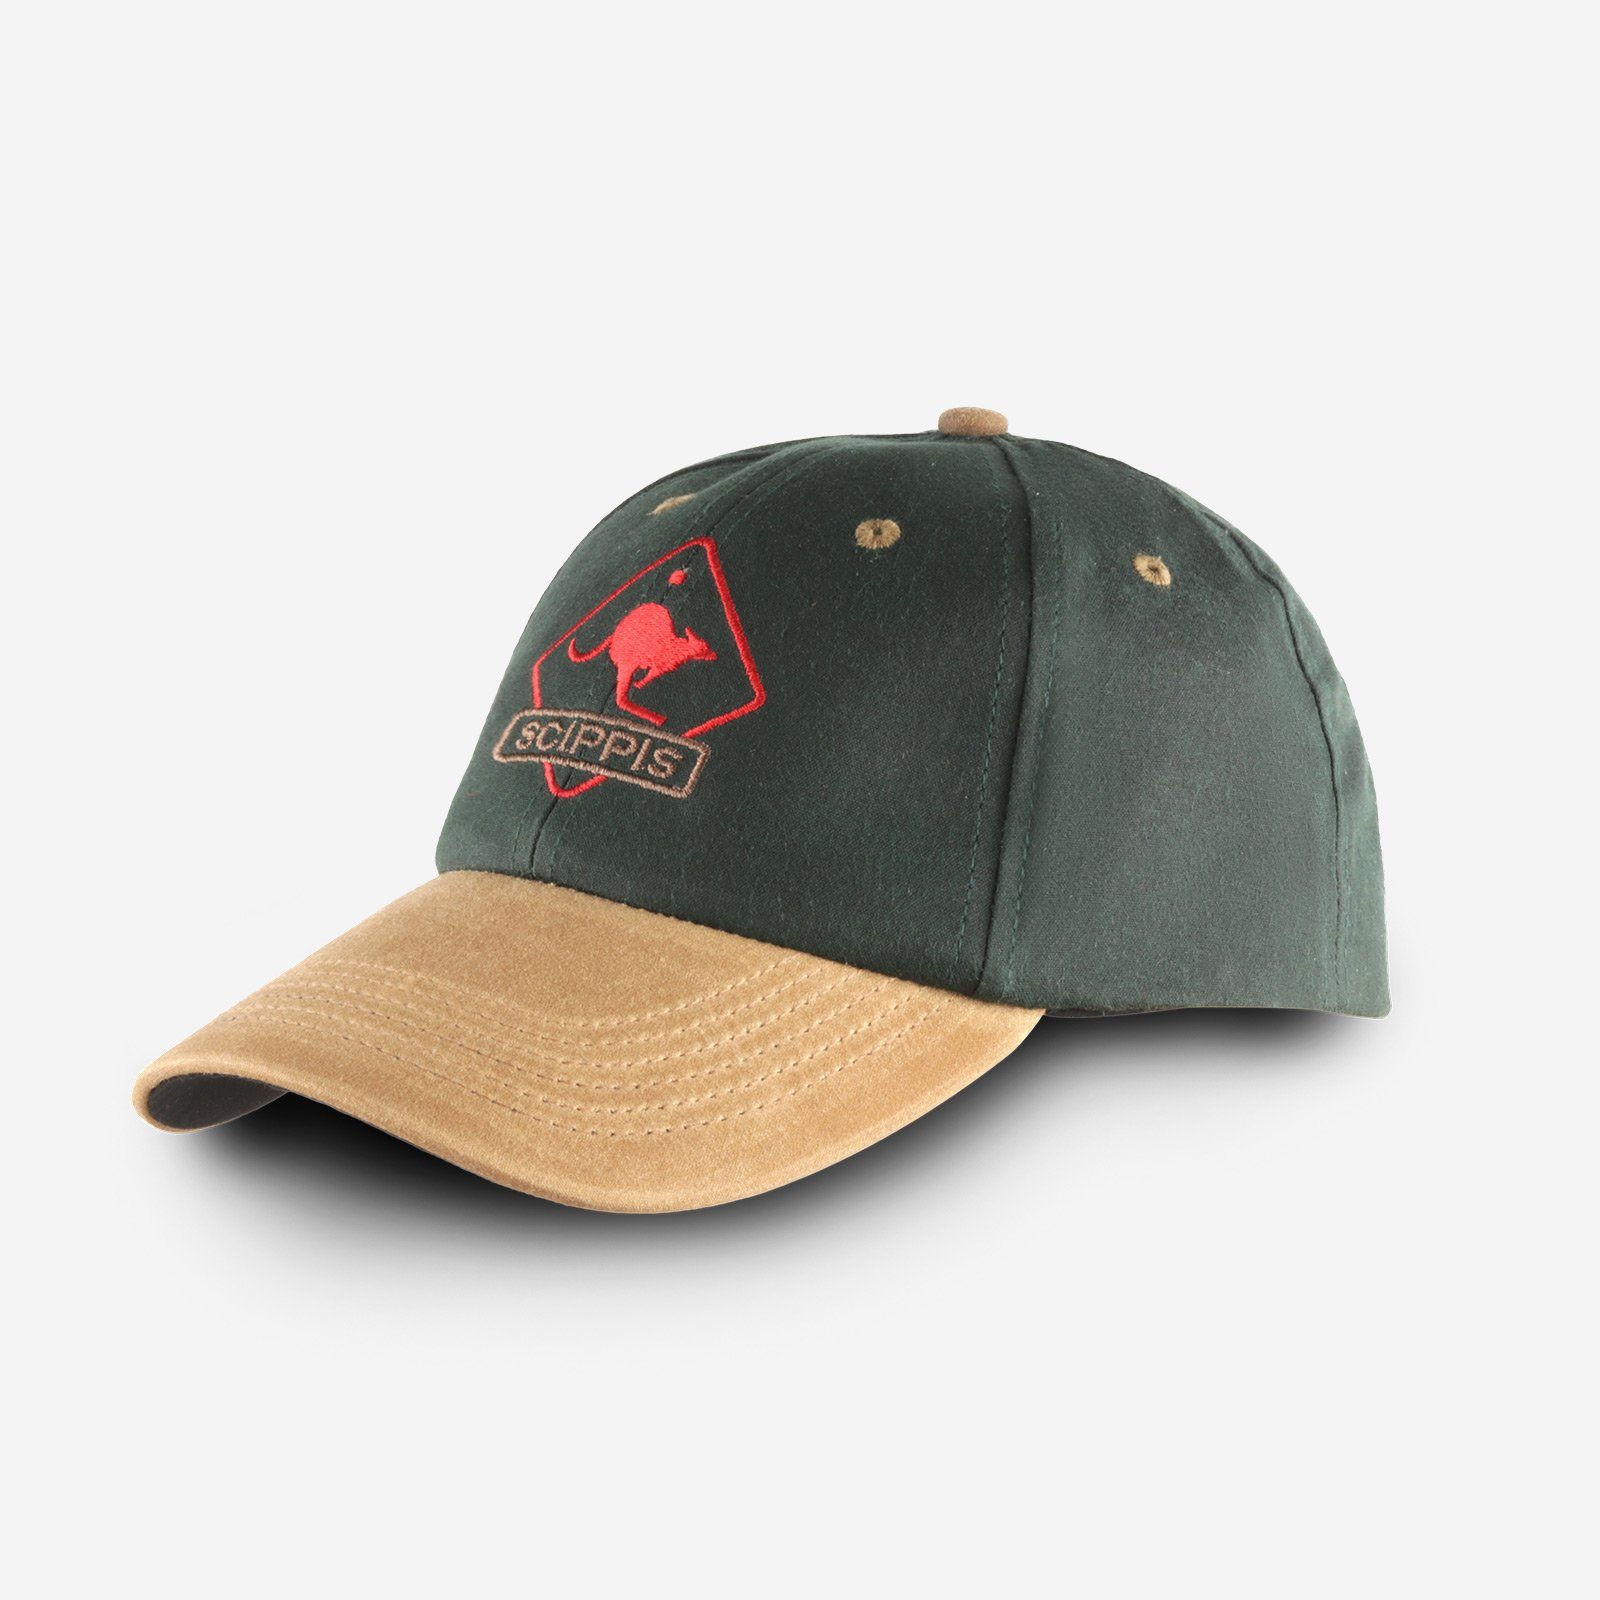 Scippis Baseball Cap OILSKIN CAP Extrem wasserabweisend, windundurchlässig atmungsaktiv tan/bottlegreen